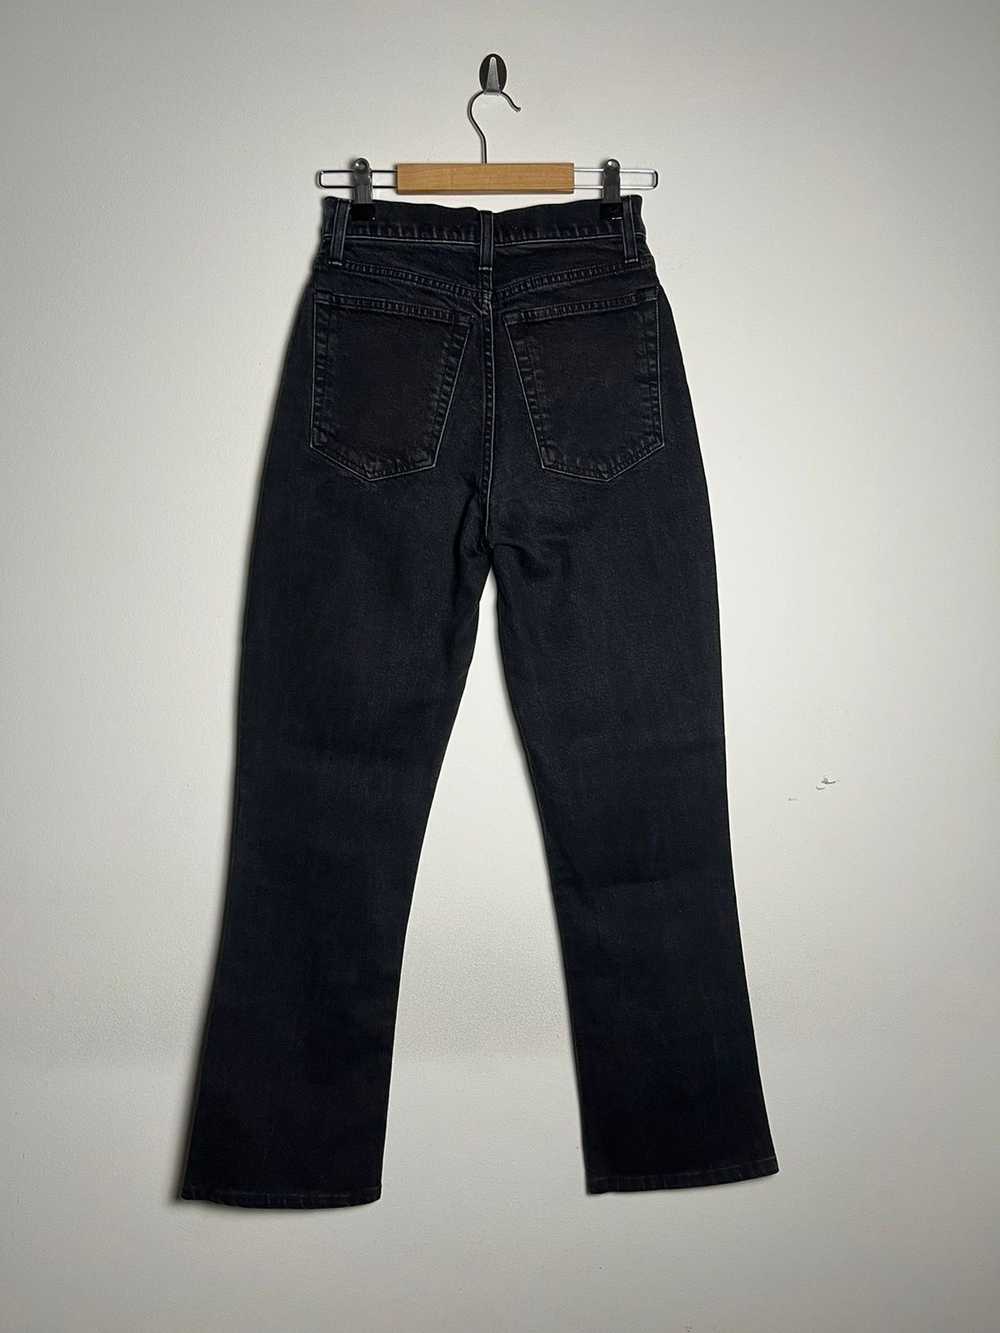 Helmut Lang Helmut Lang Black Hi Bootcut Jeans - image 2